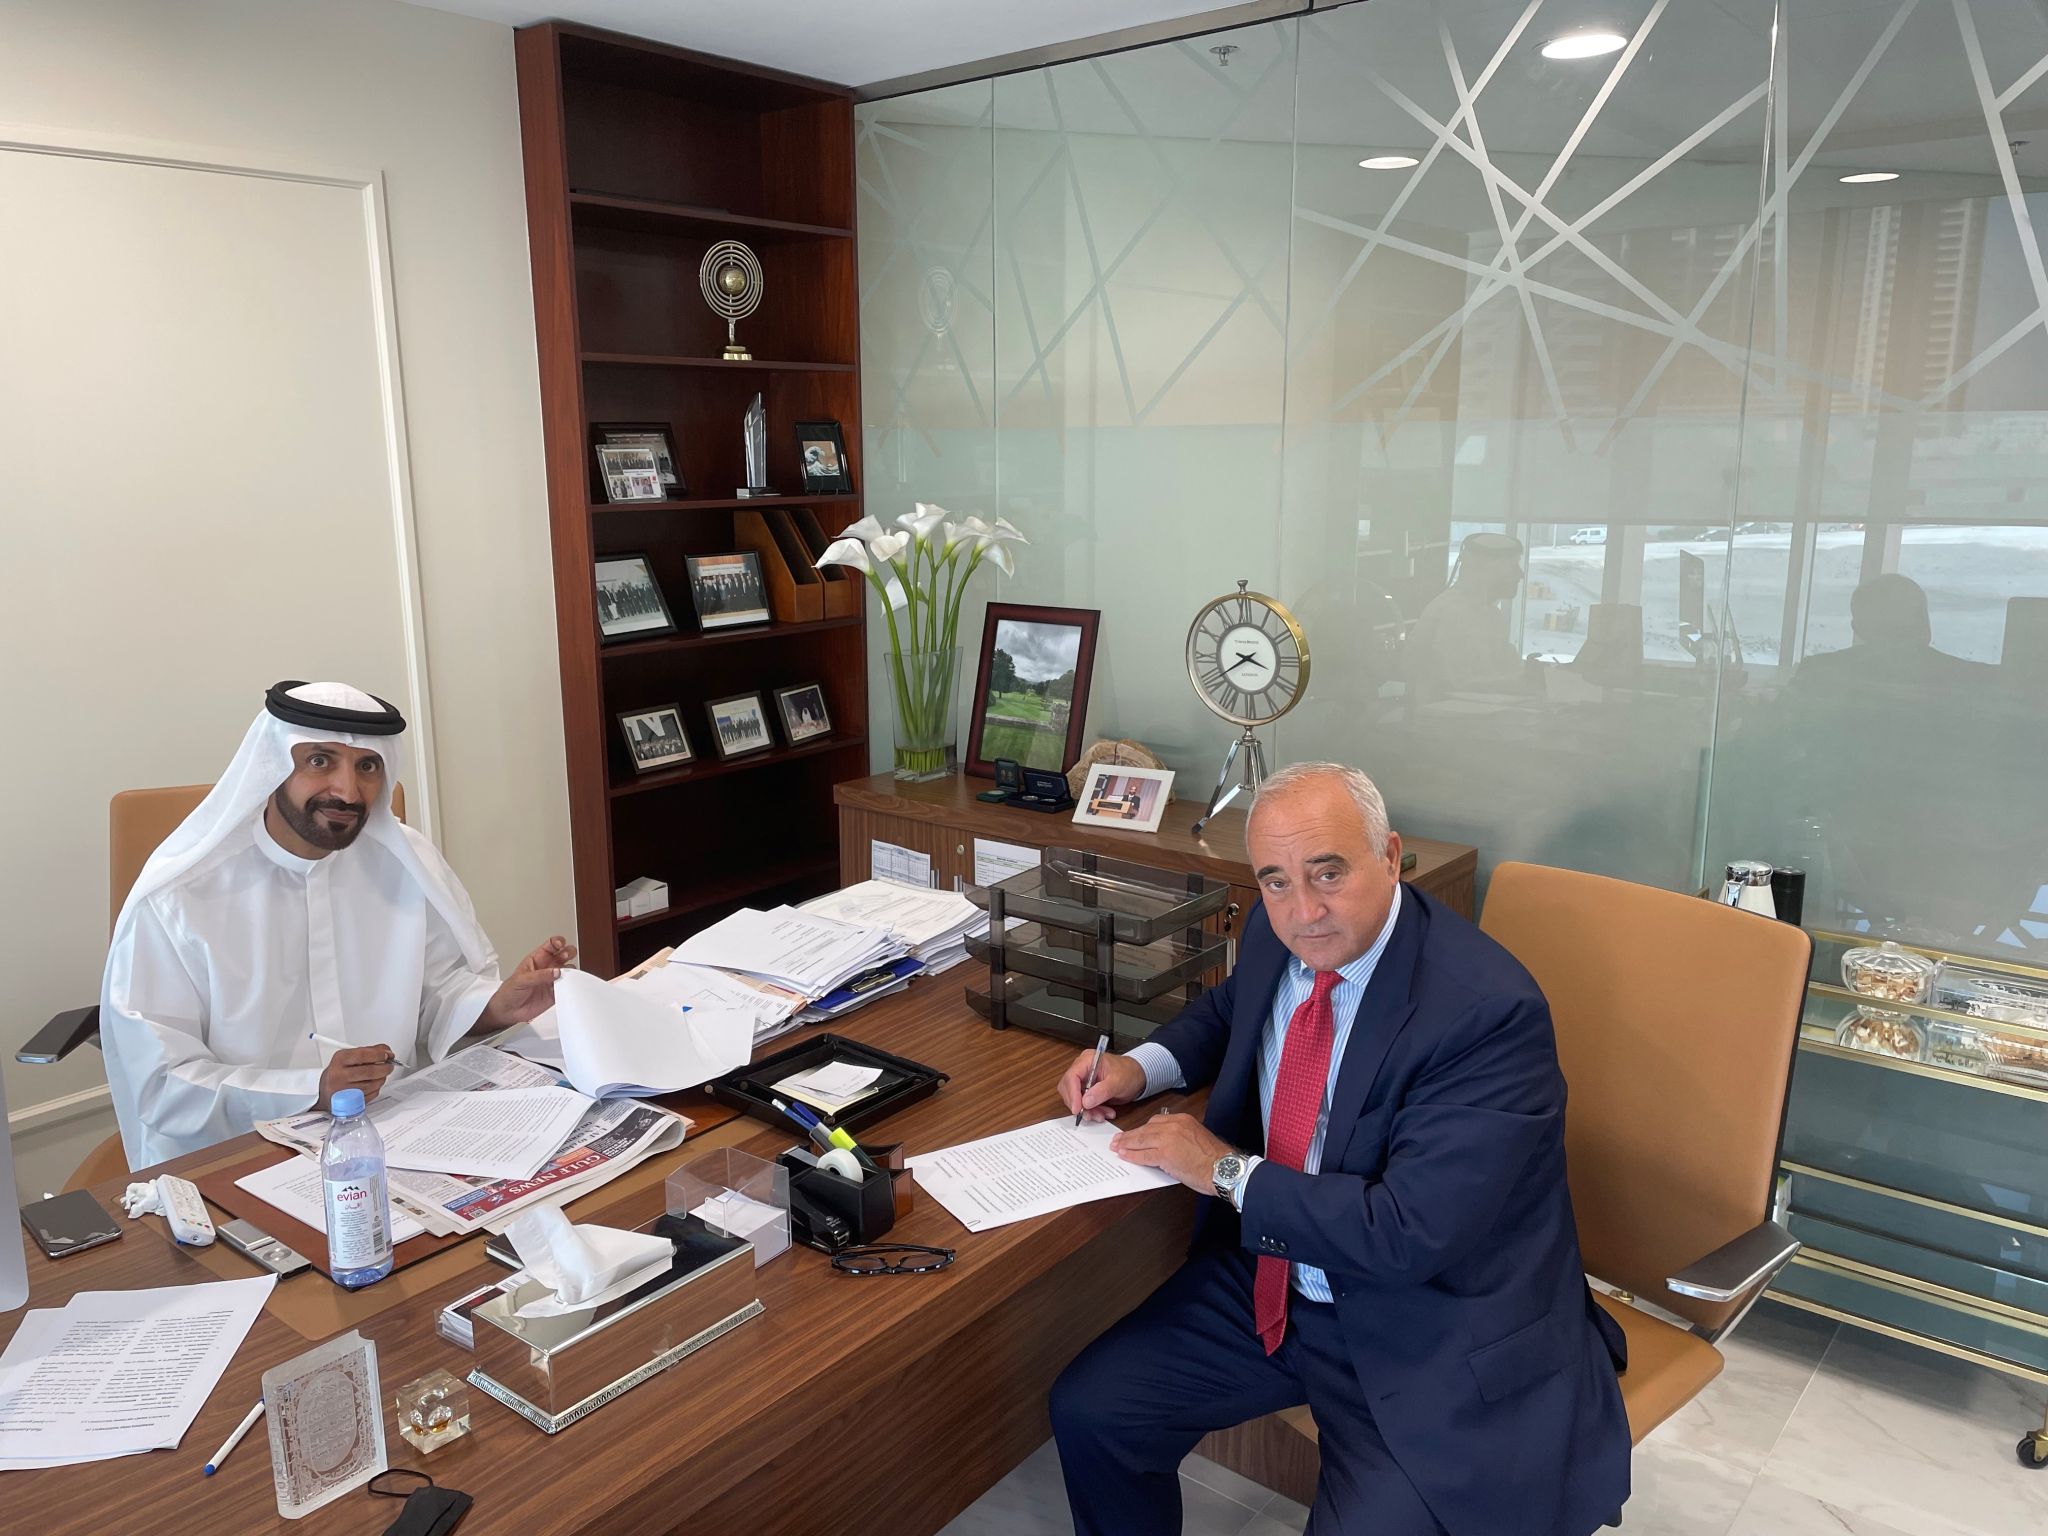 The establishment of Atlantica Smart Metering Solutions LLC was signed on 2 June in Abu Dhabi